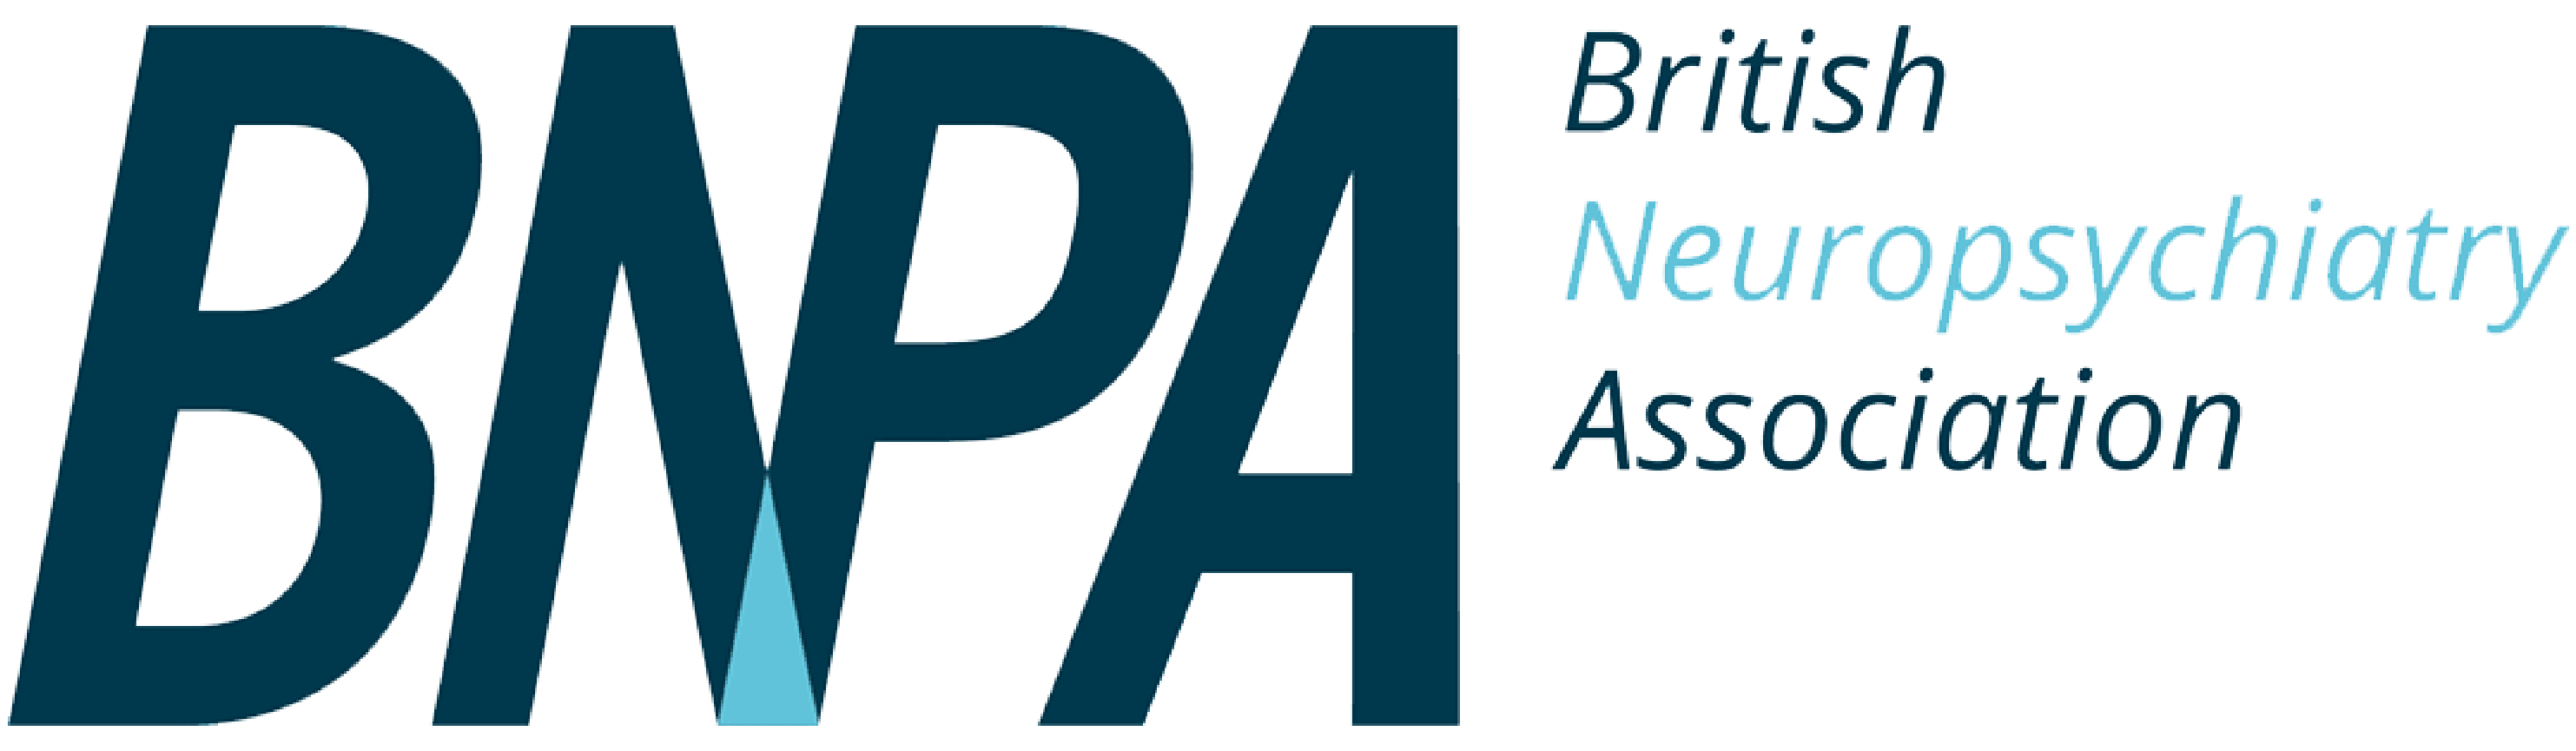 The British Neuropsychiatry Association logo